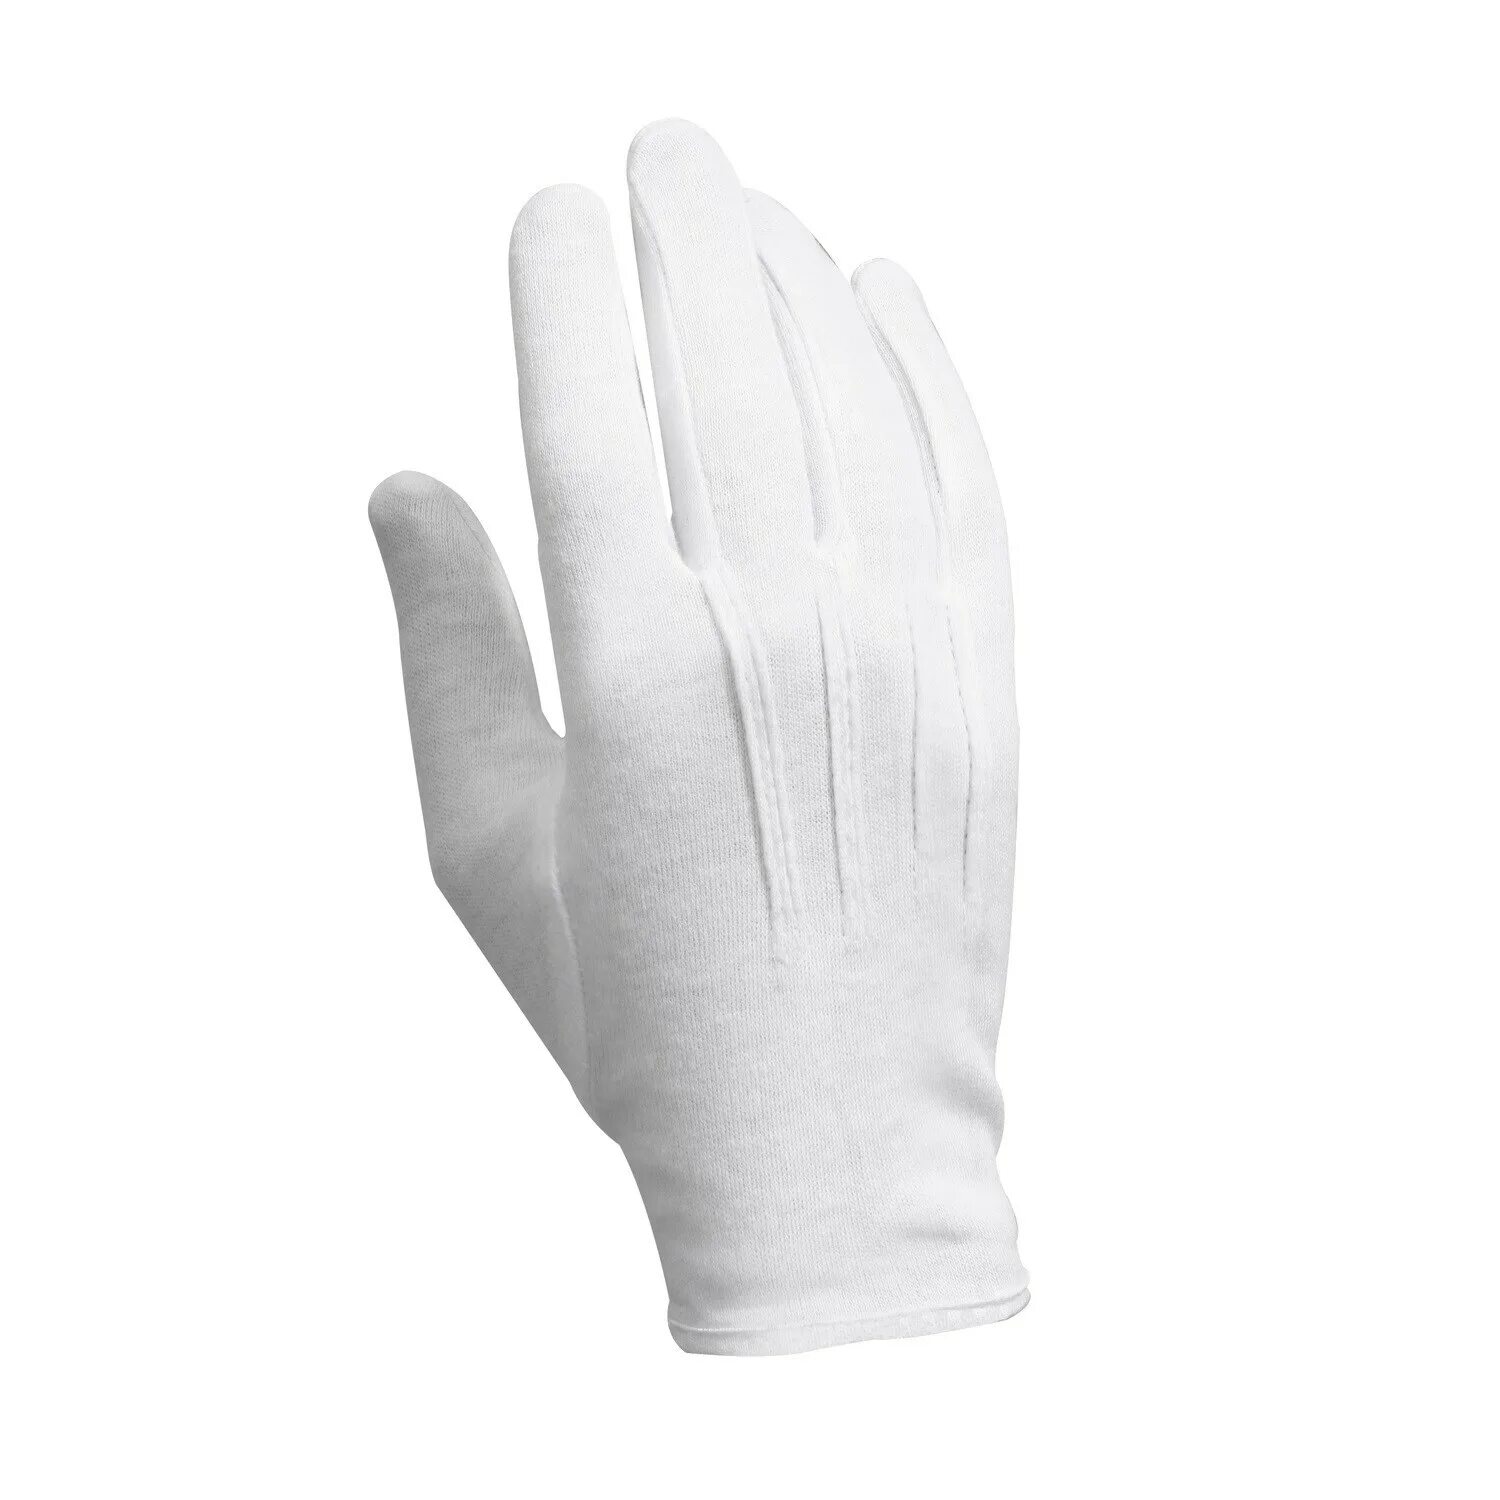 24 белых перчатки и 20 черных. Rothco Gloves. Парадные перчатки. Белые перчатки. Офицерские перчатки белые.